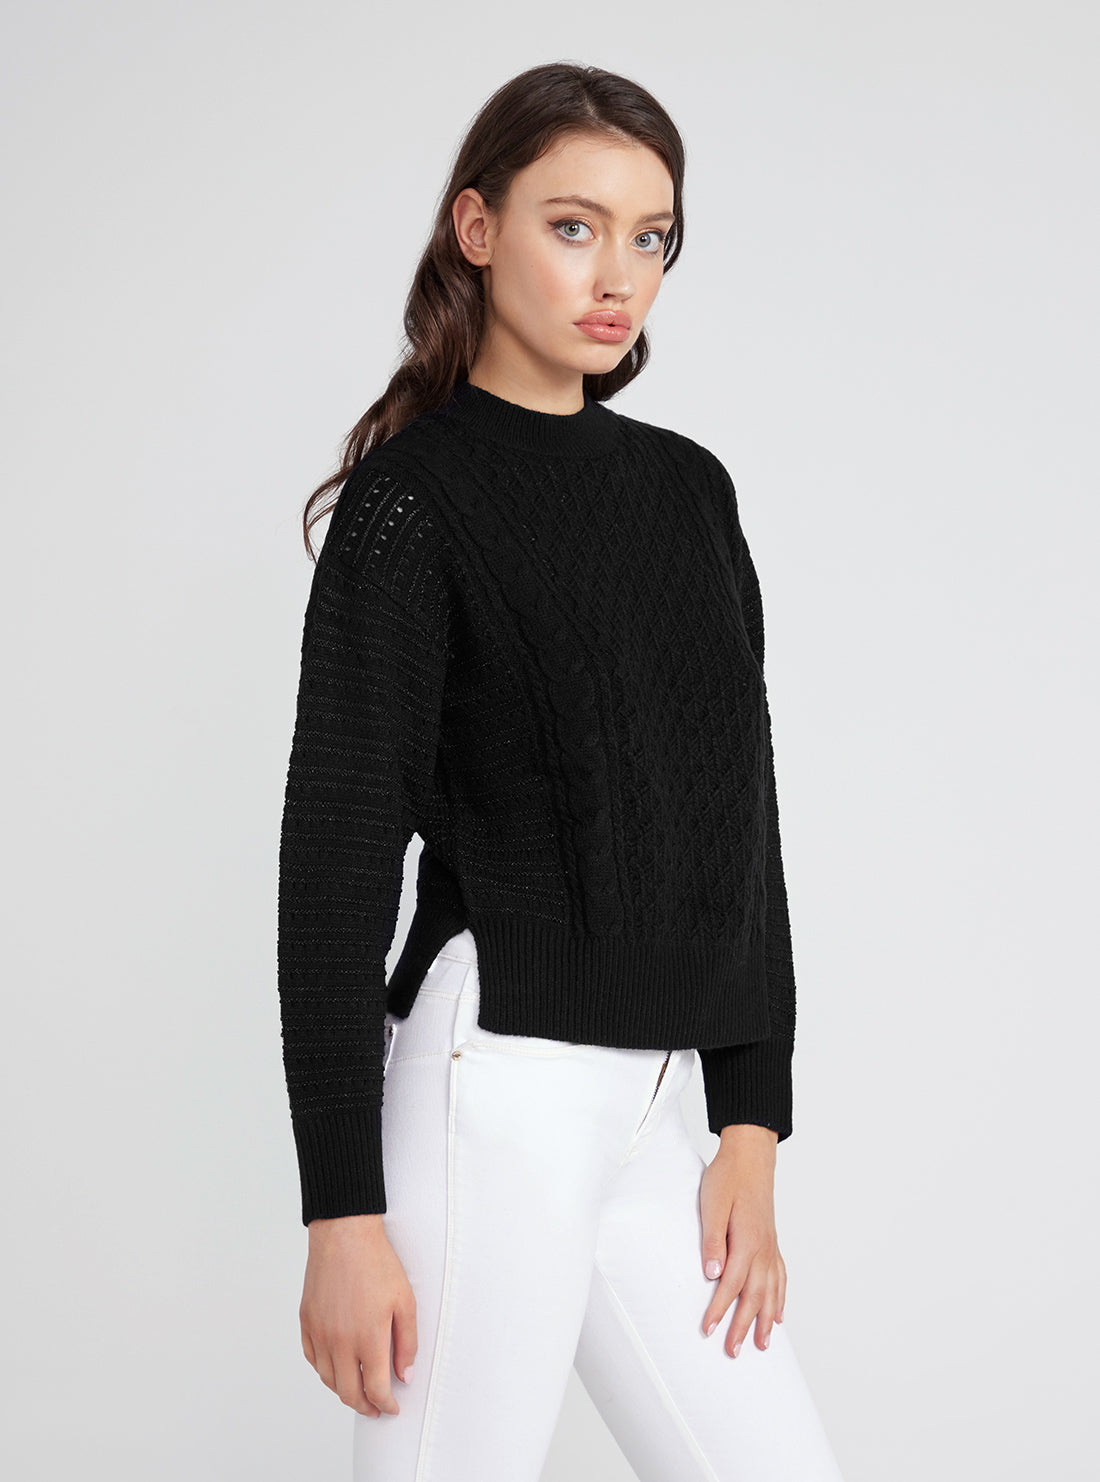 GUESS Black Long Sleeve Edwige Sweater side view